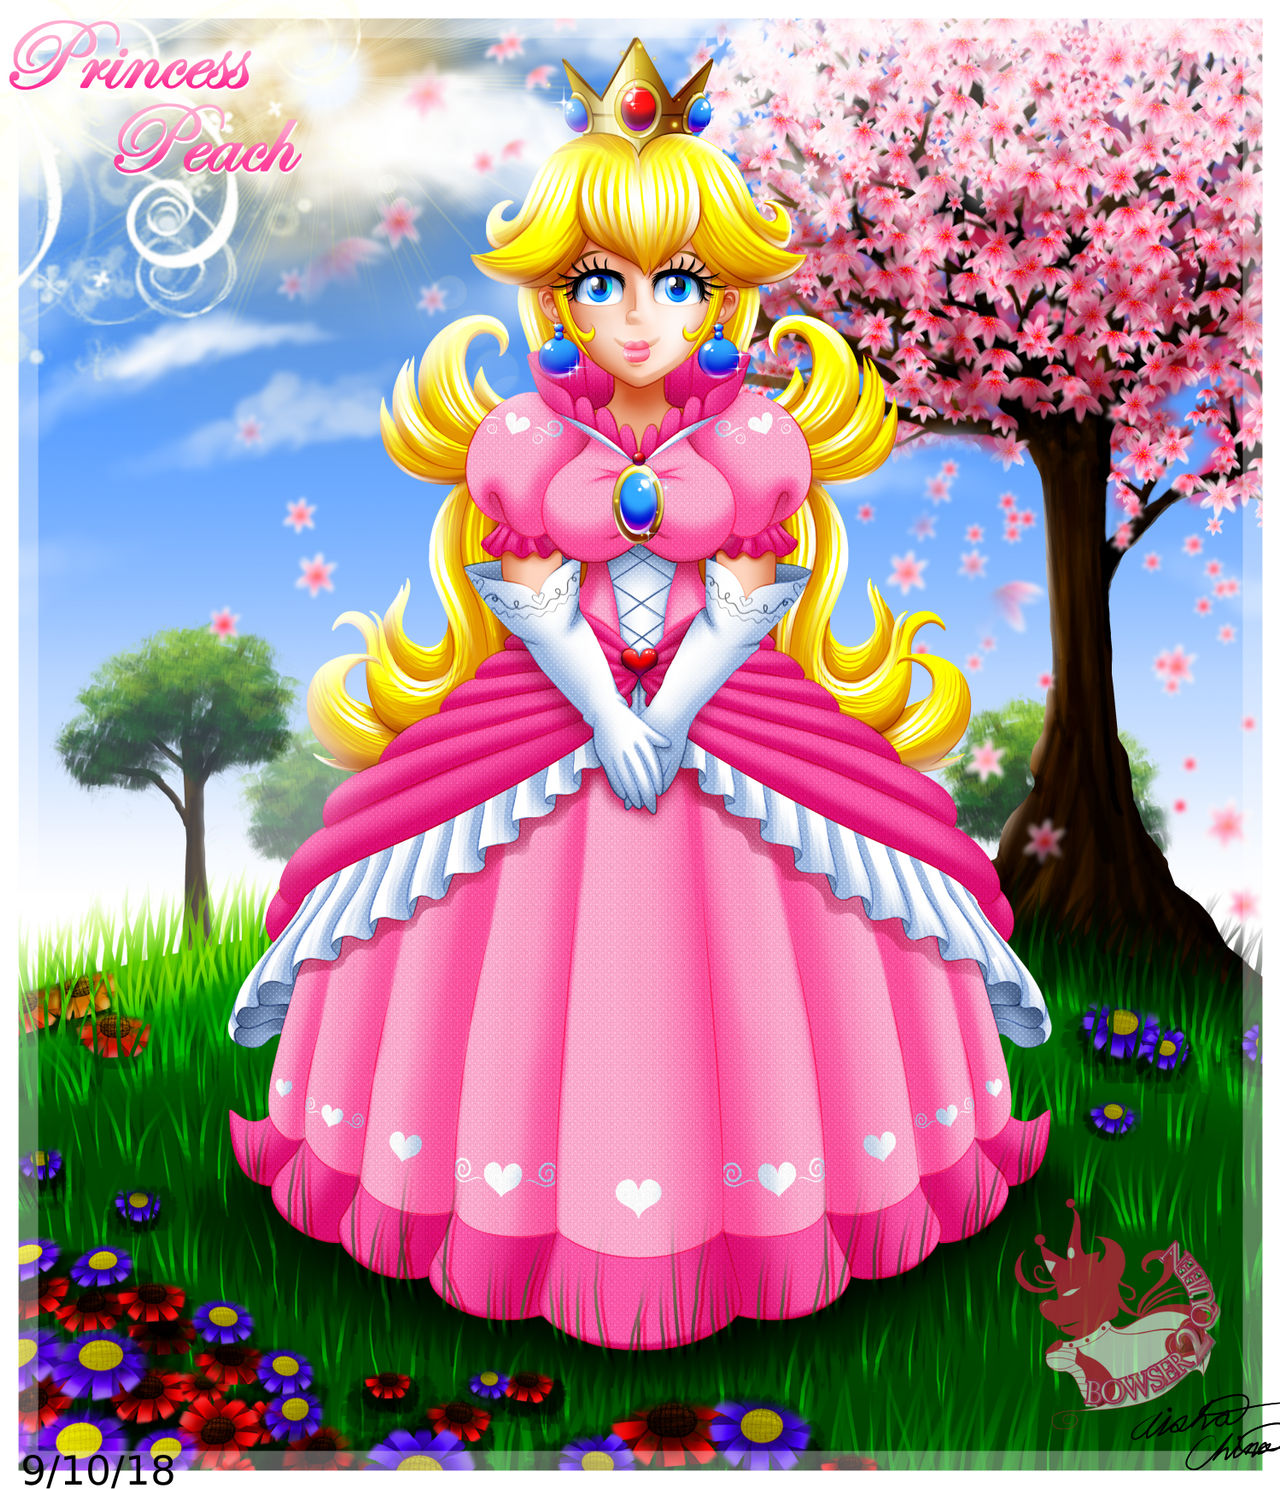 Princess Peach 2010 remake by Bowser2Queen on DeviantArt